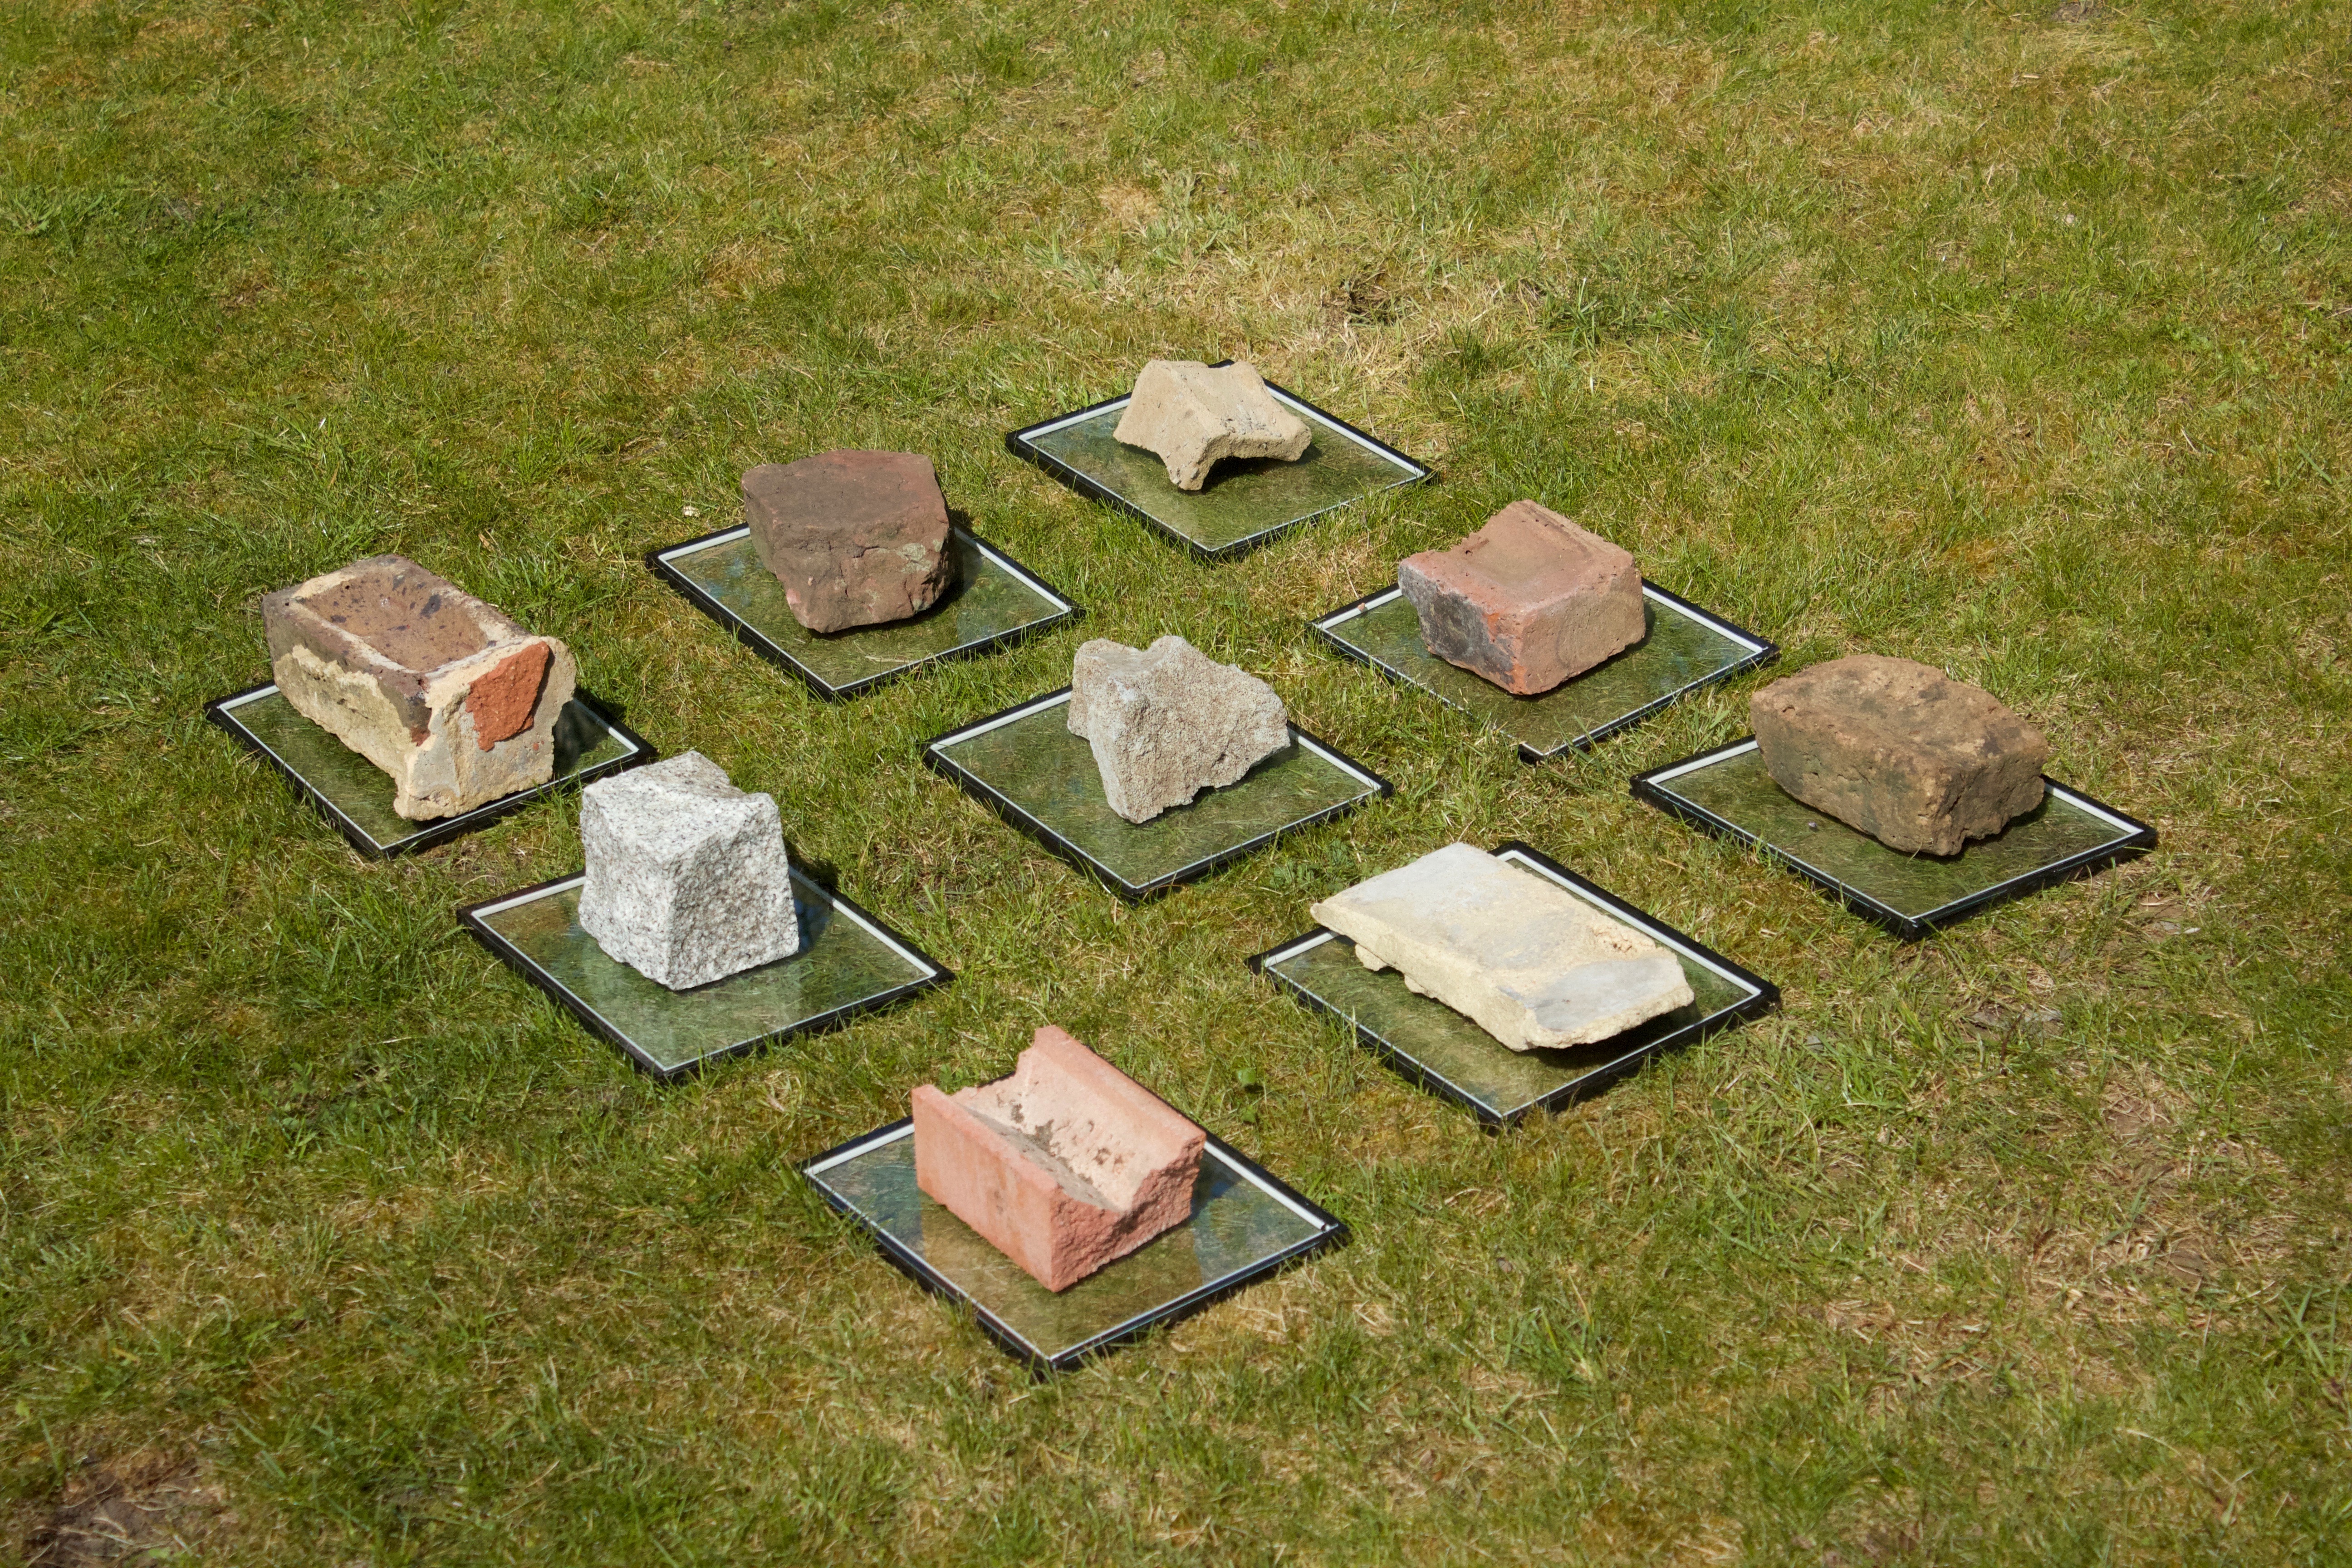 bricks on glass plates on top of grass